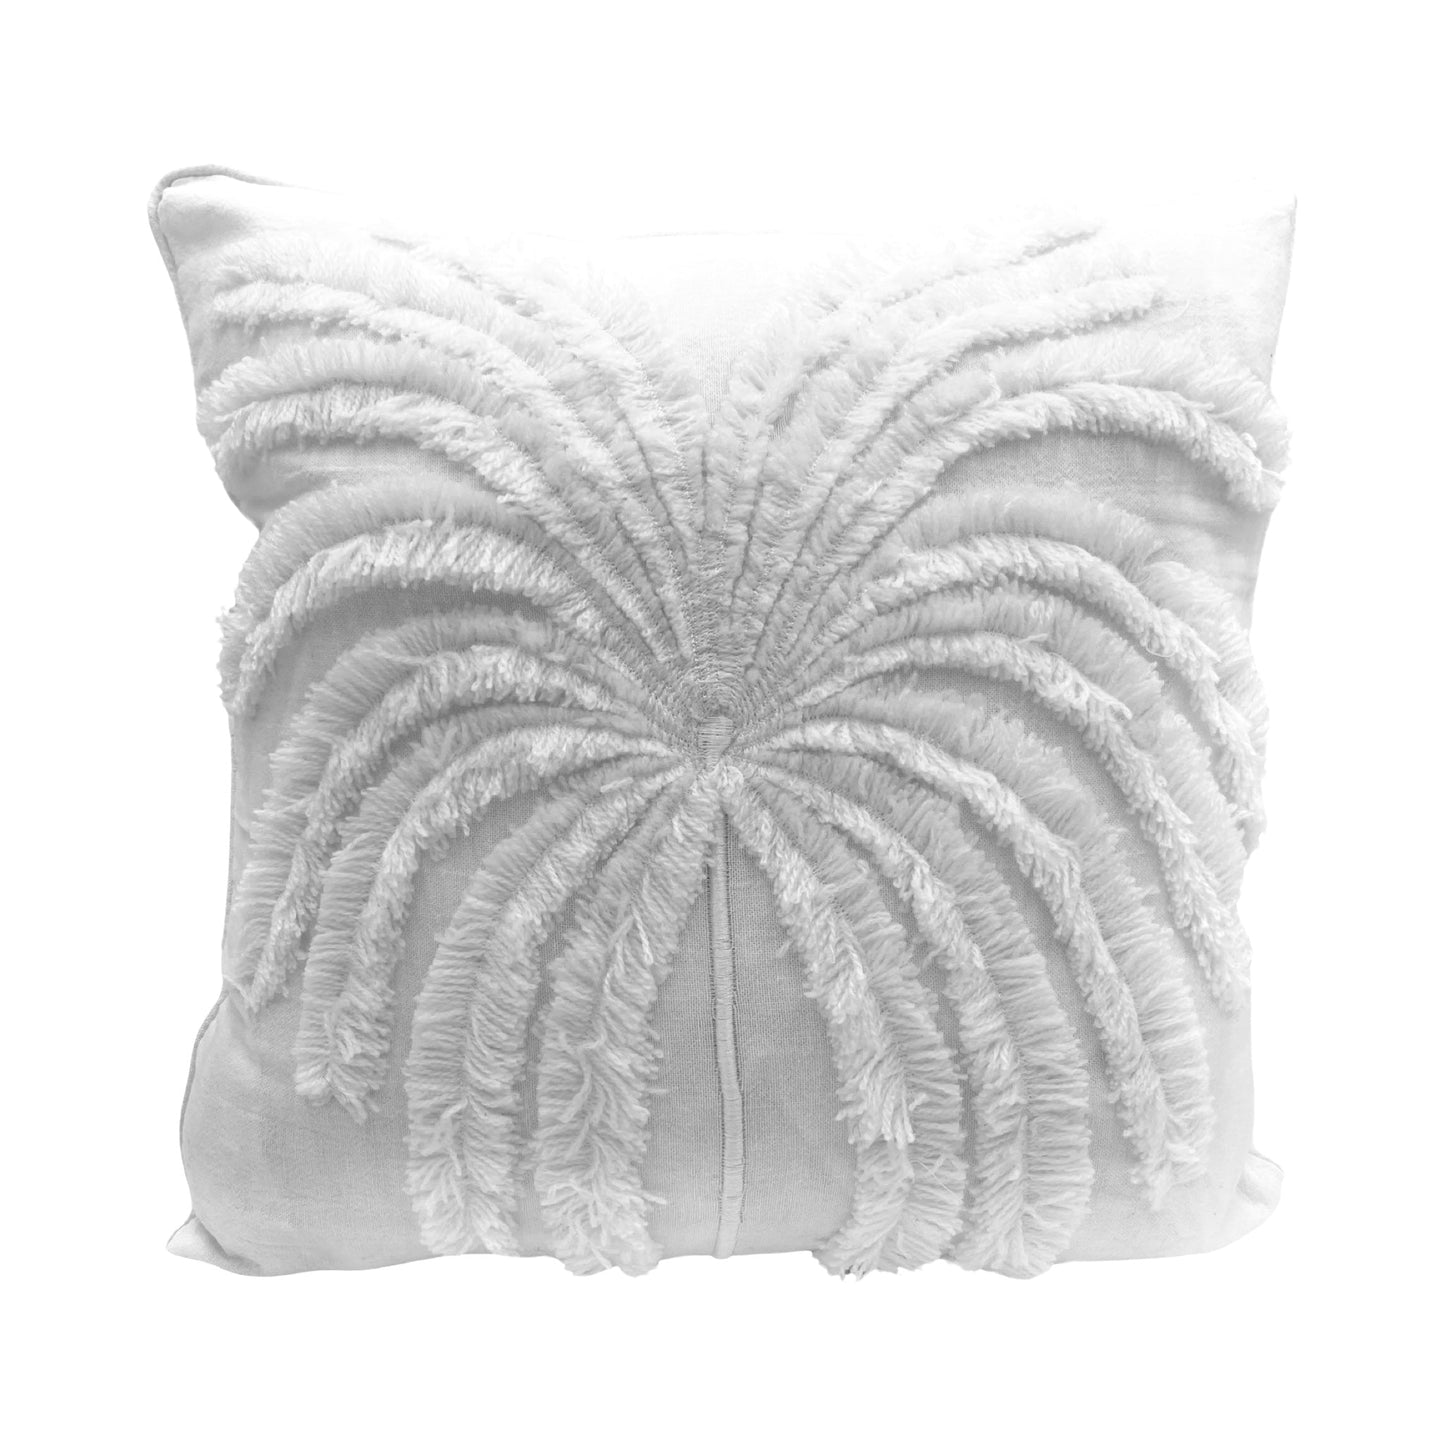 Trinity Palm Cushion Cover / 40cm x 40cm